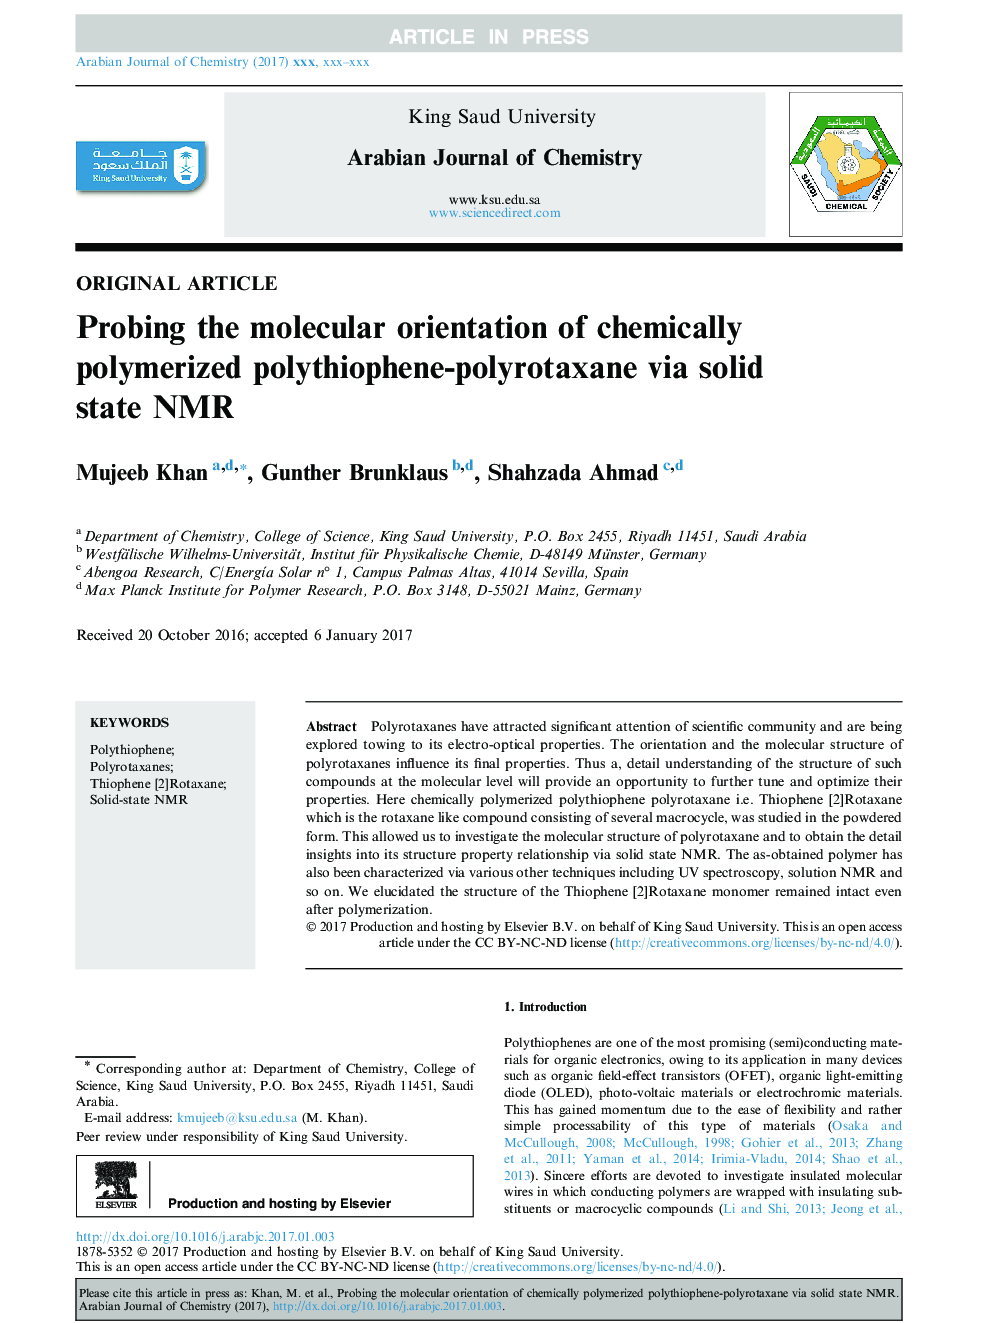 Probing the molecular orientation of chemically polymerized polythiophene-polyrotaxane via solid state NMR